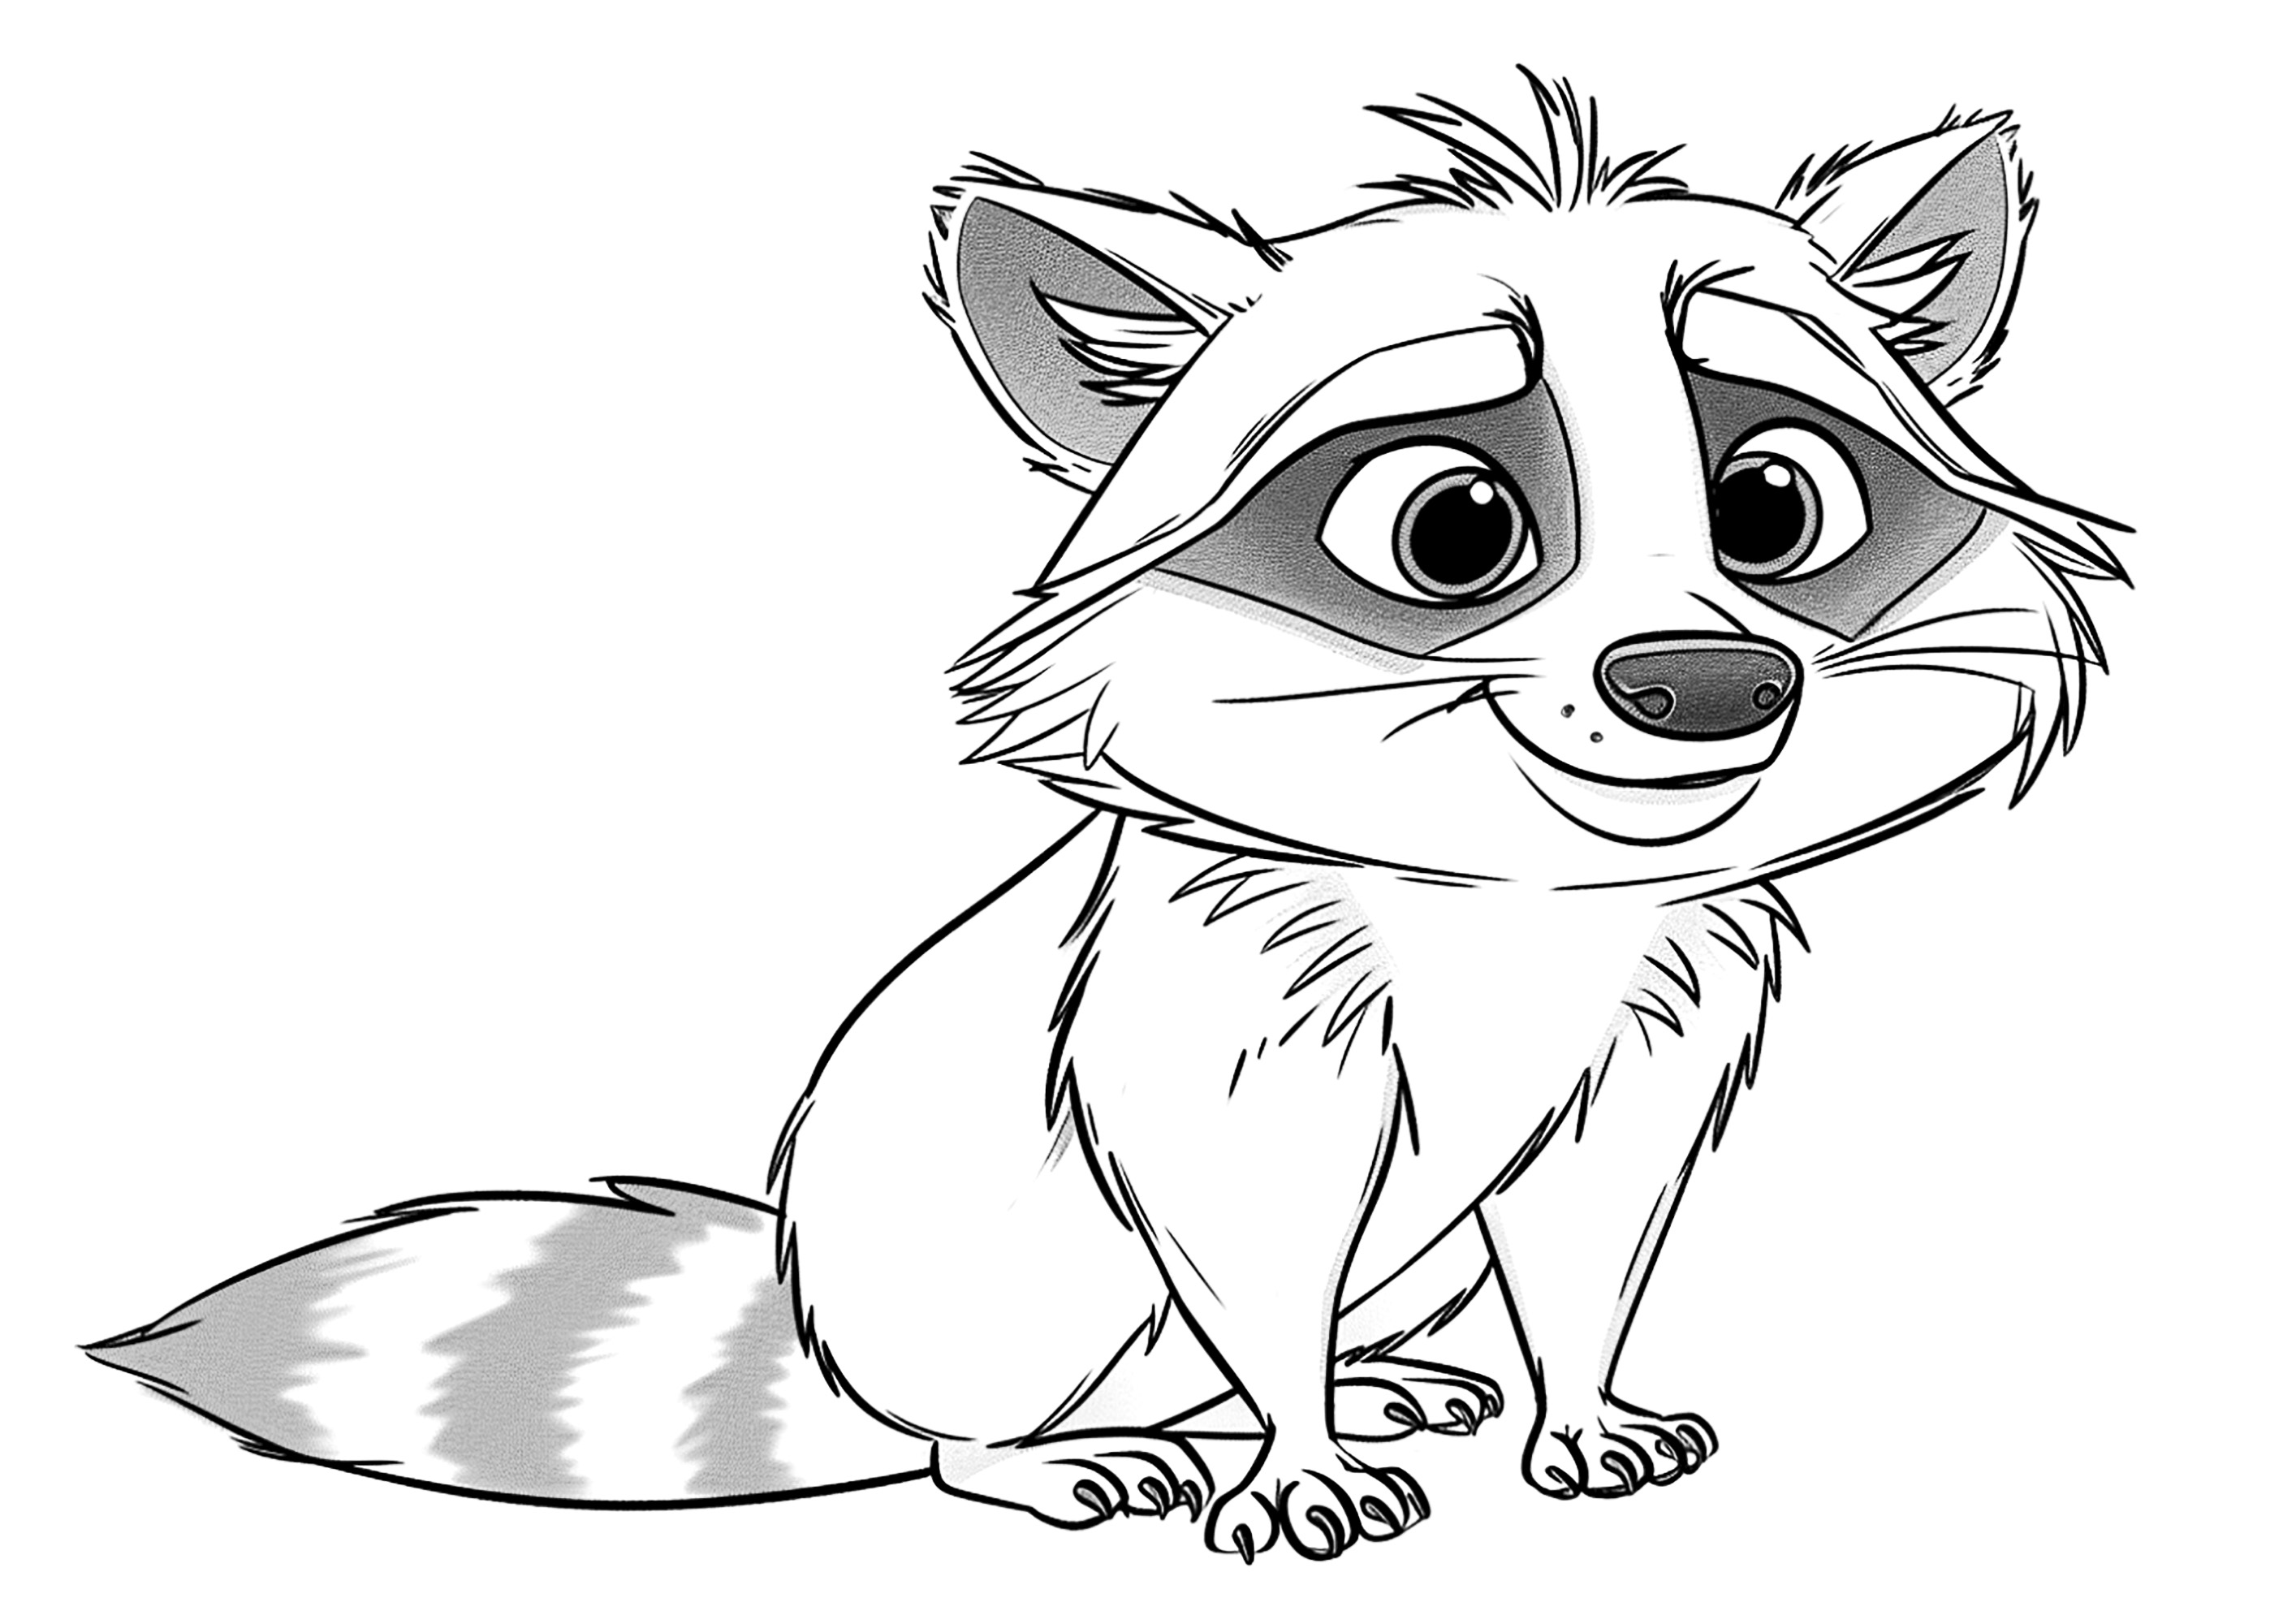 Pixar-style raccoon